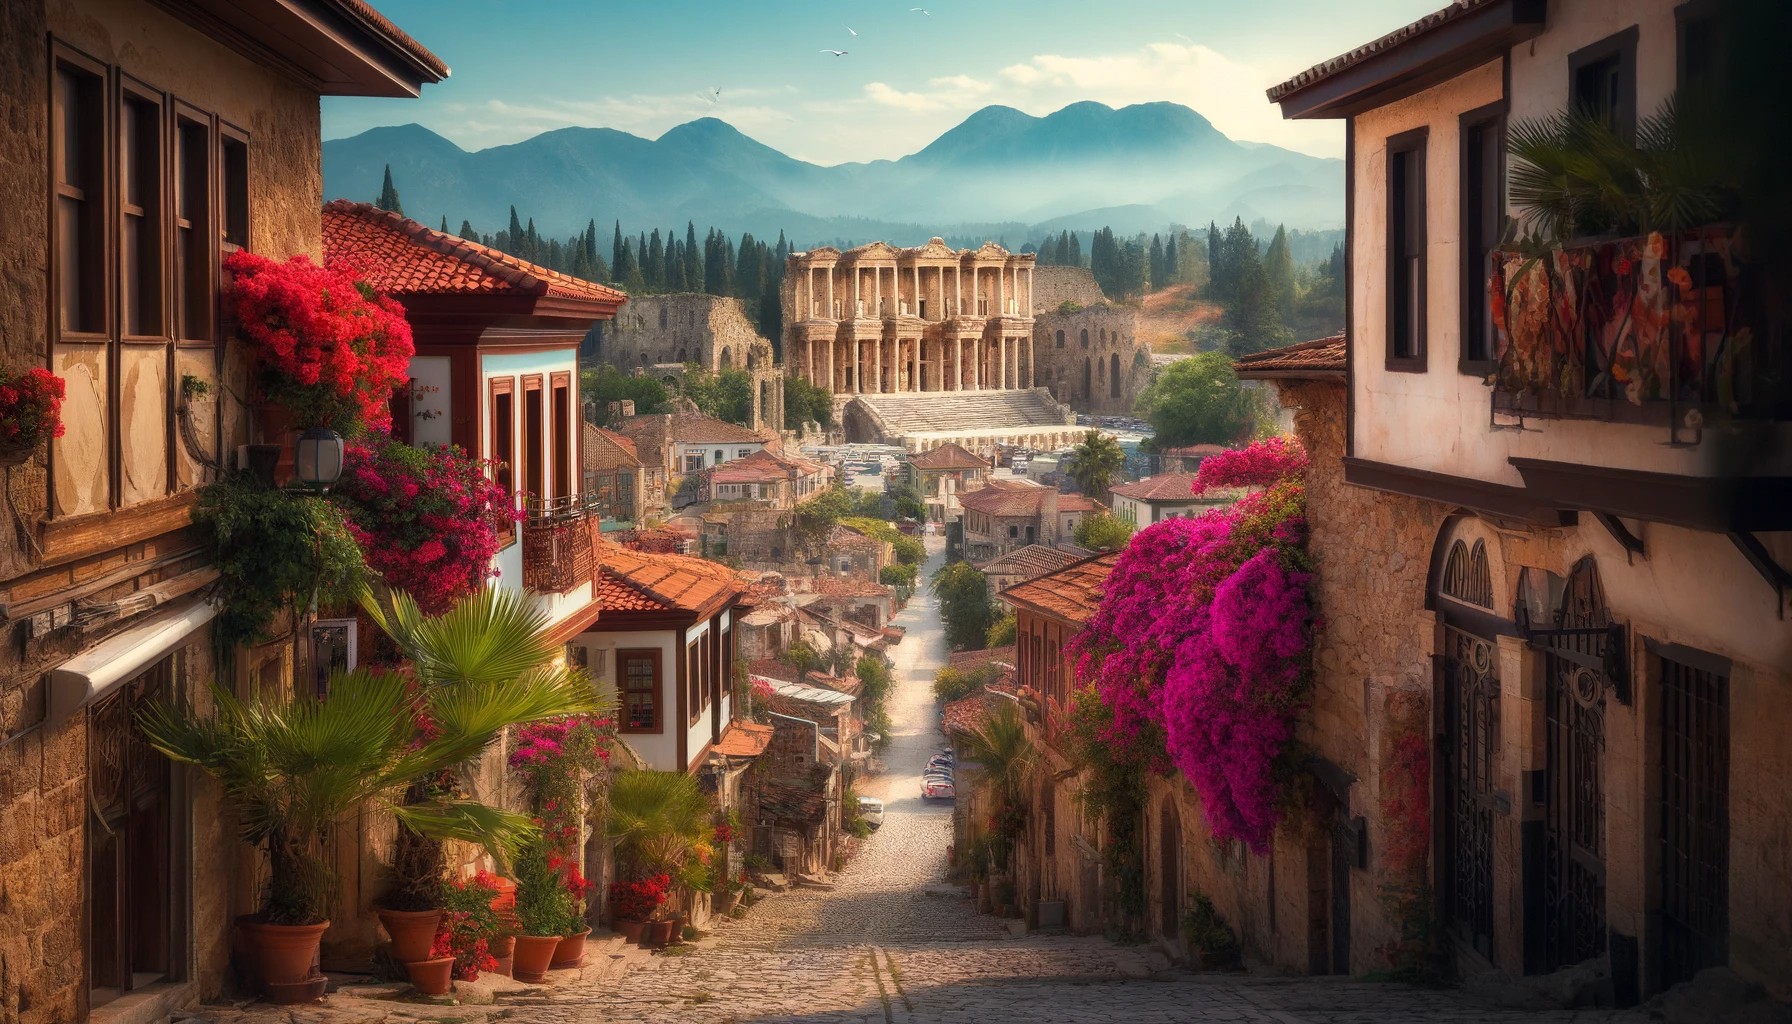 Antalya Tarih Turu: Kaleiçi'nden Aspendos'a Zaman Yolculuğu